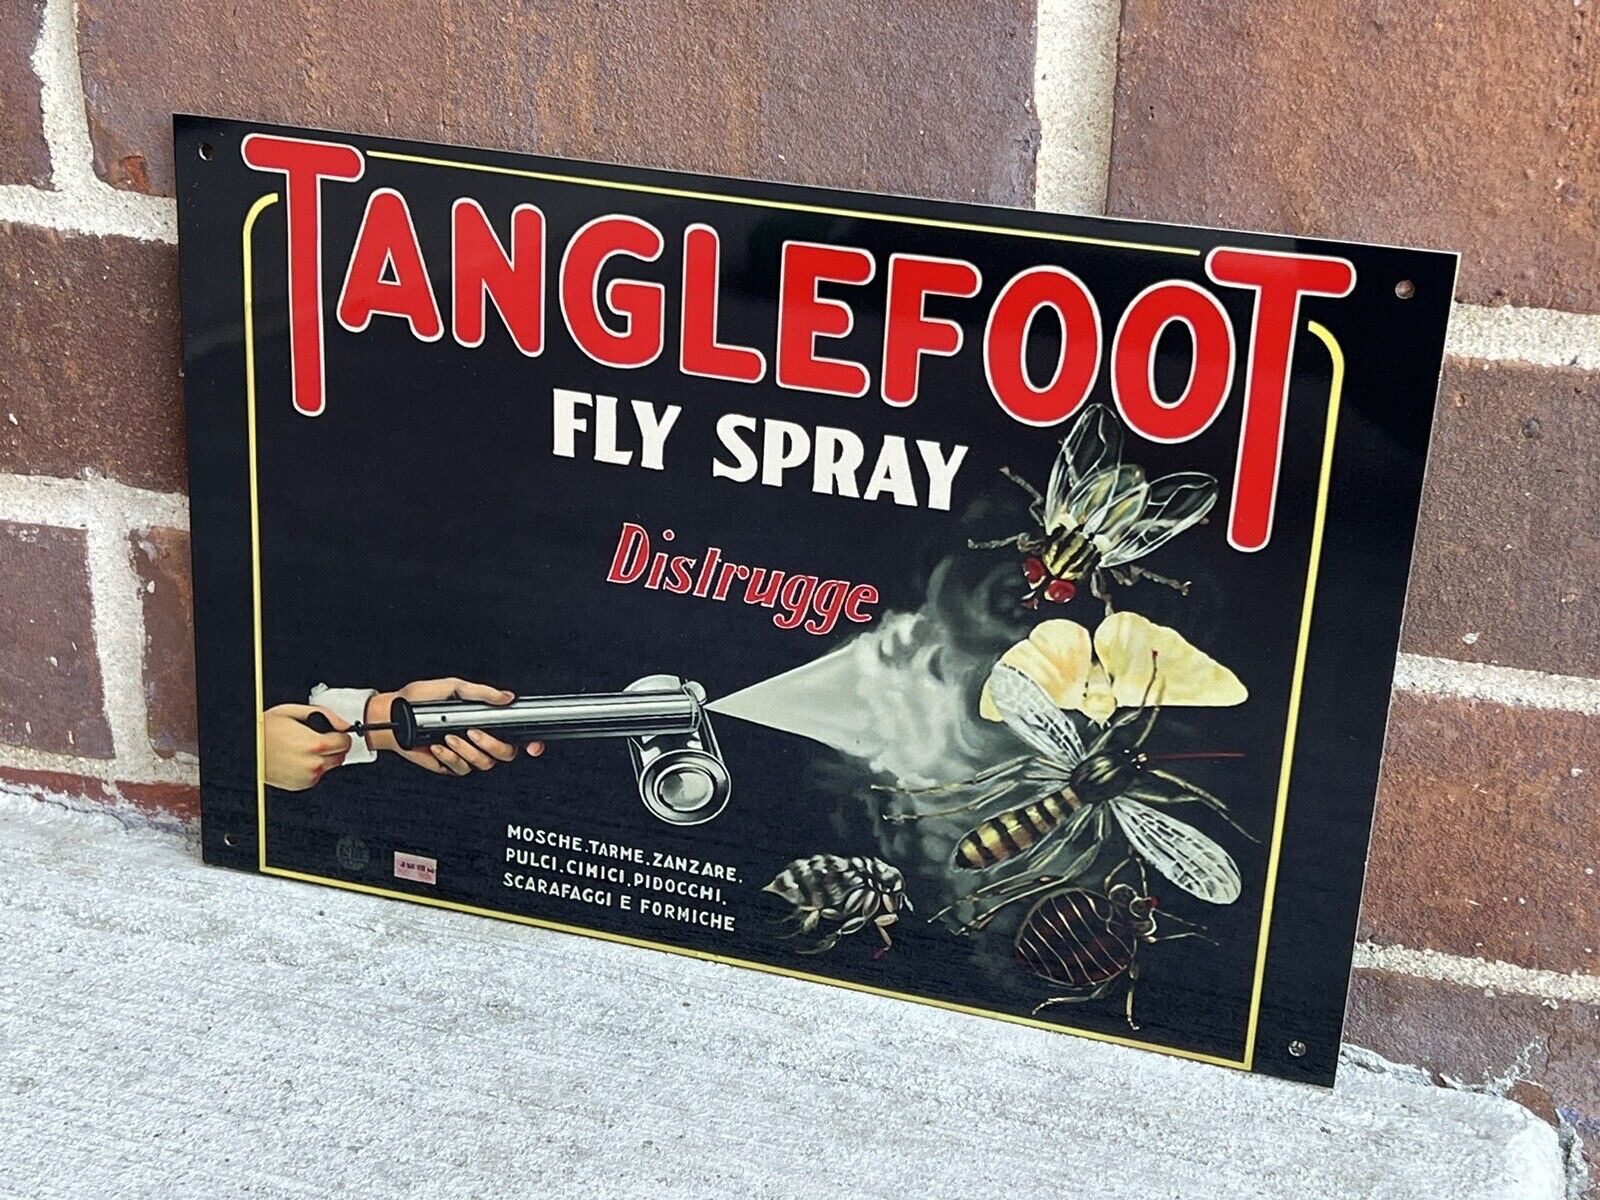 Tanglefoot Flypaper Hi Gloss Aluminum Vintage Style sign